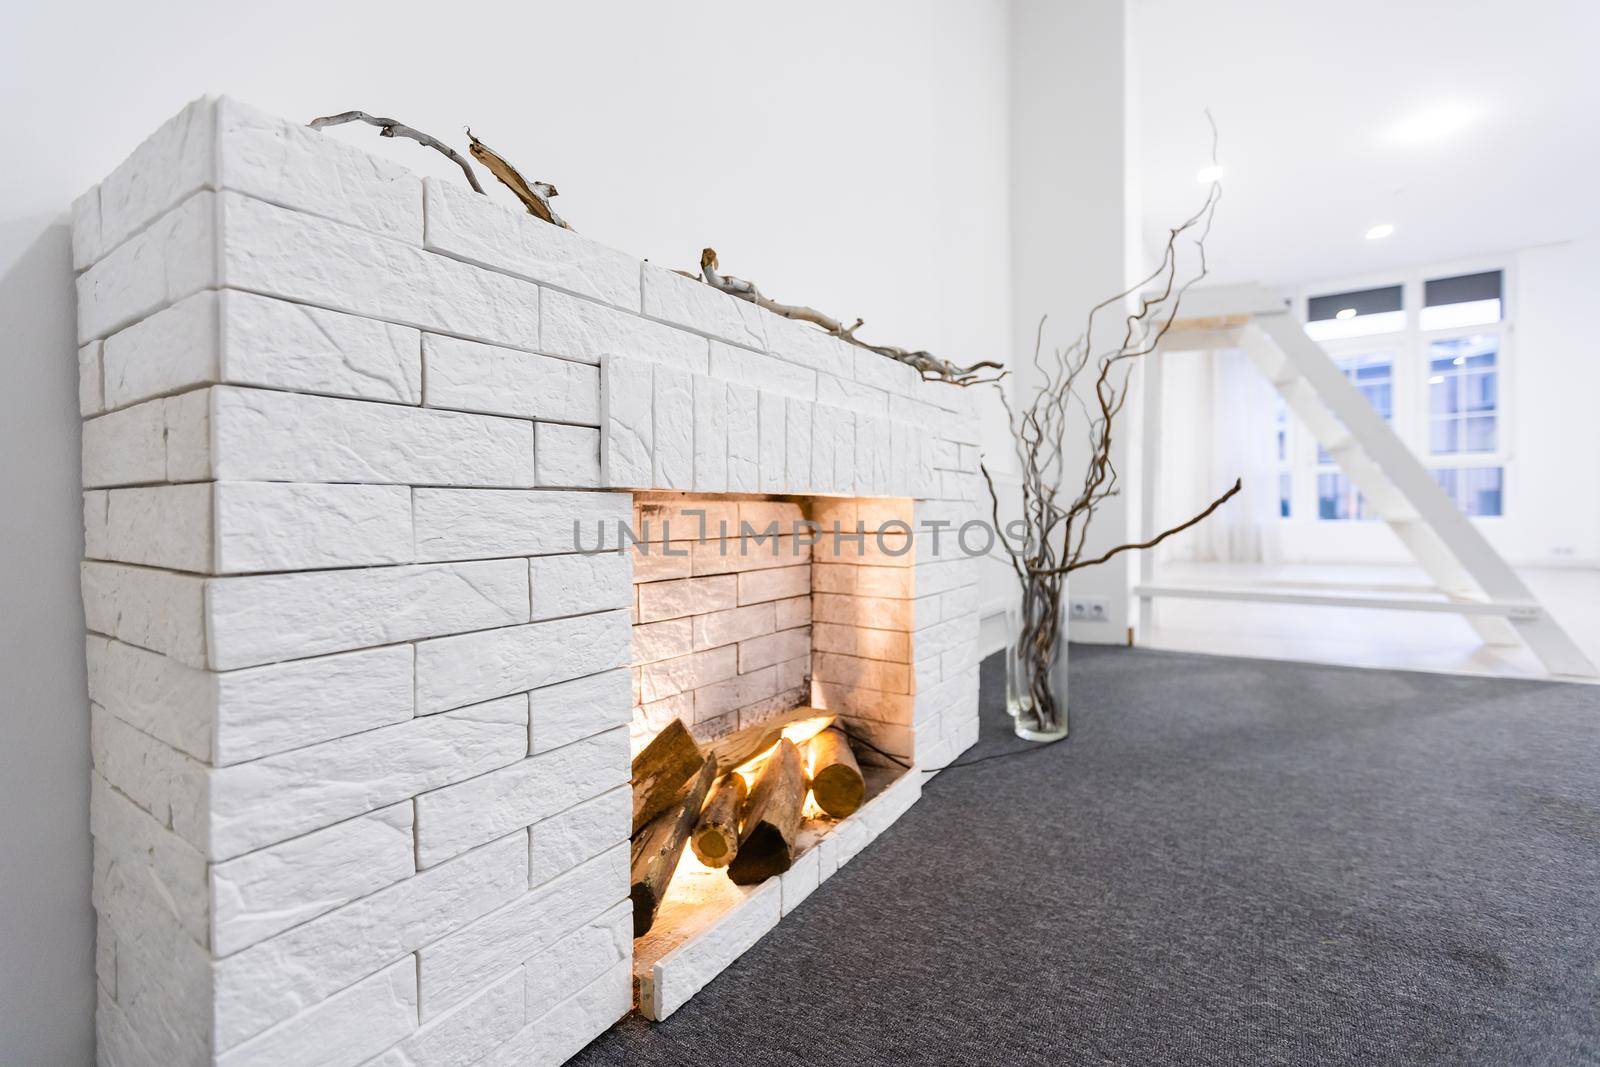 Cozy homemade fireplace decor studio. by Andelov13